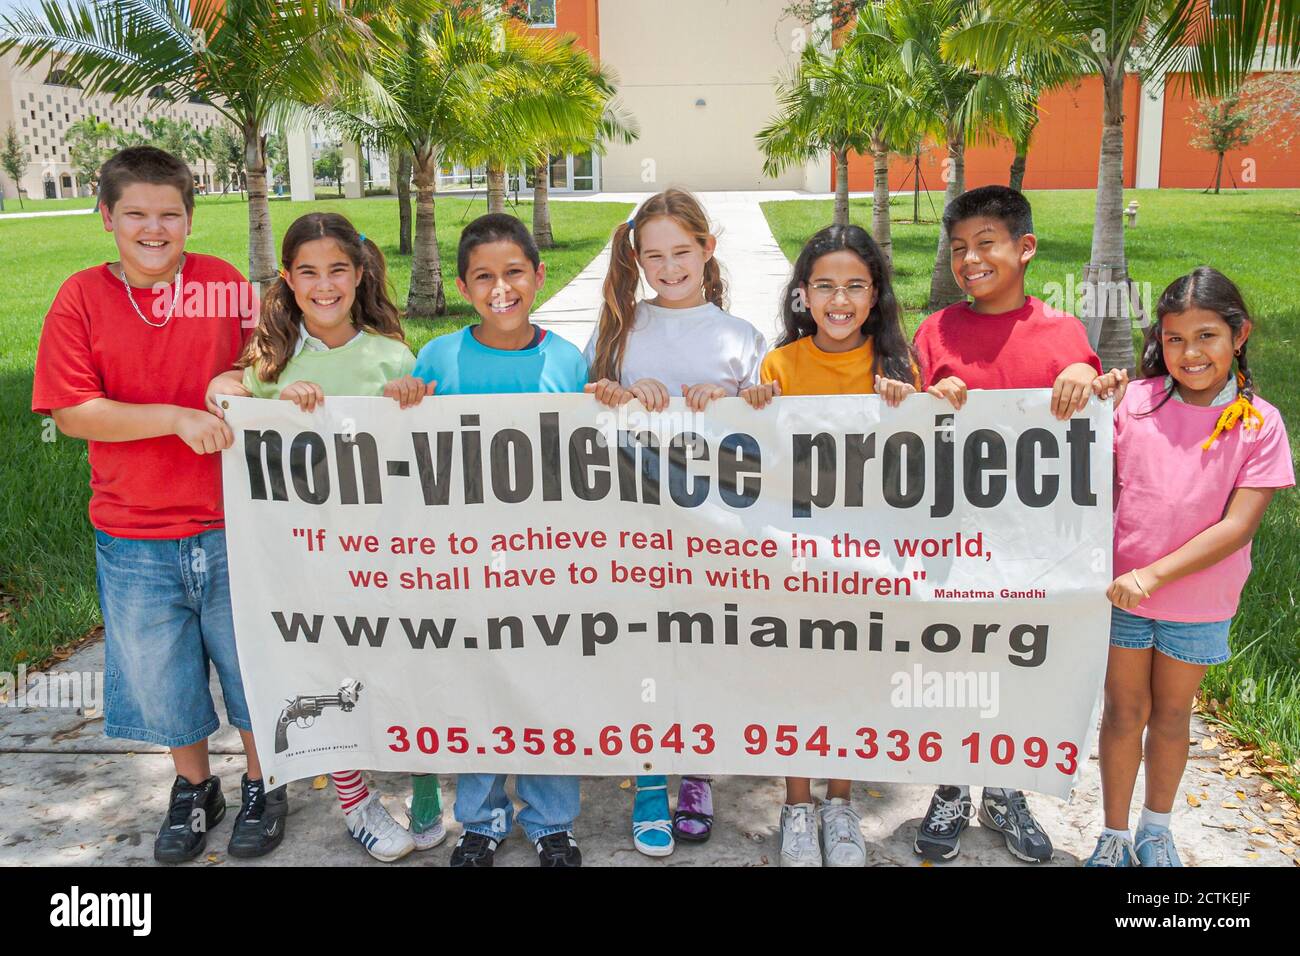 Miami Florida,Non Violence Project USA,teaching student students non violent behavior,boys boy girl girlss smiles smiling,hold holding banner,Hispanic Stock Photo